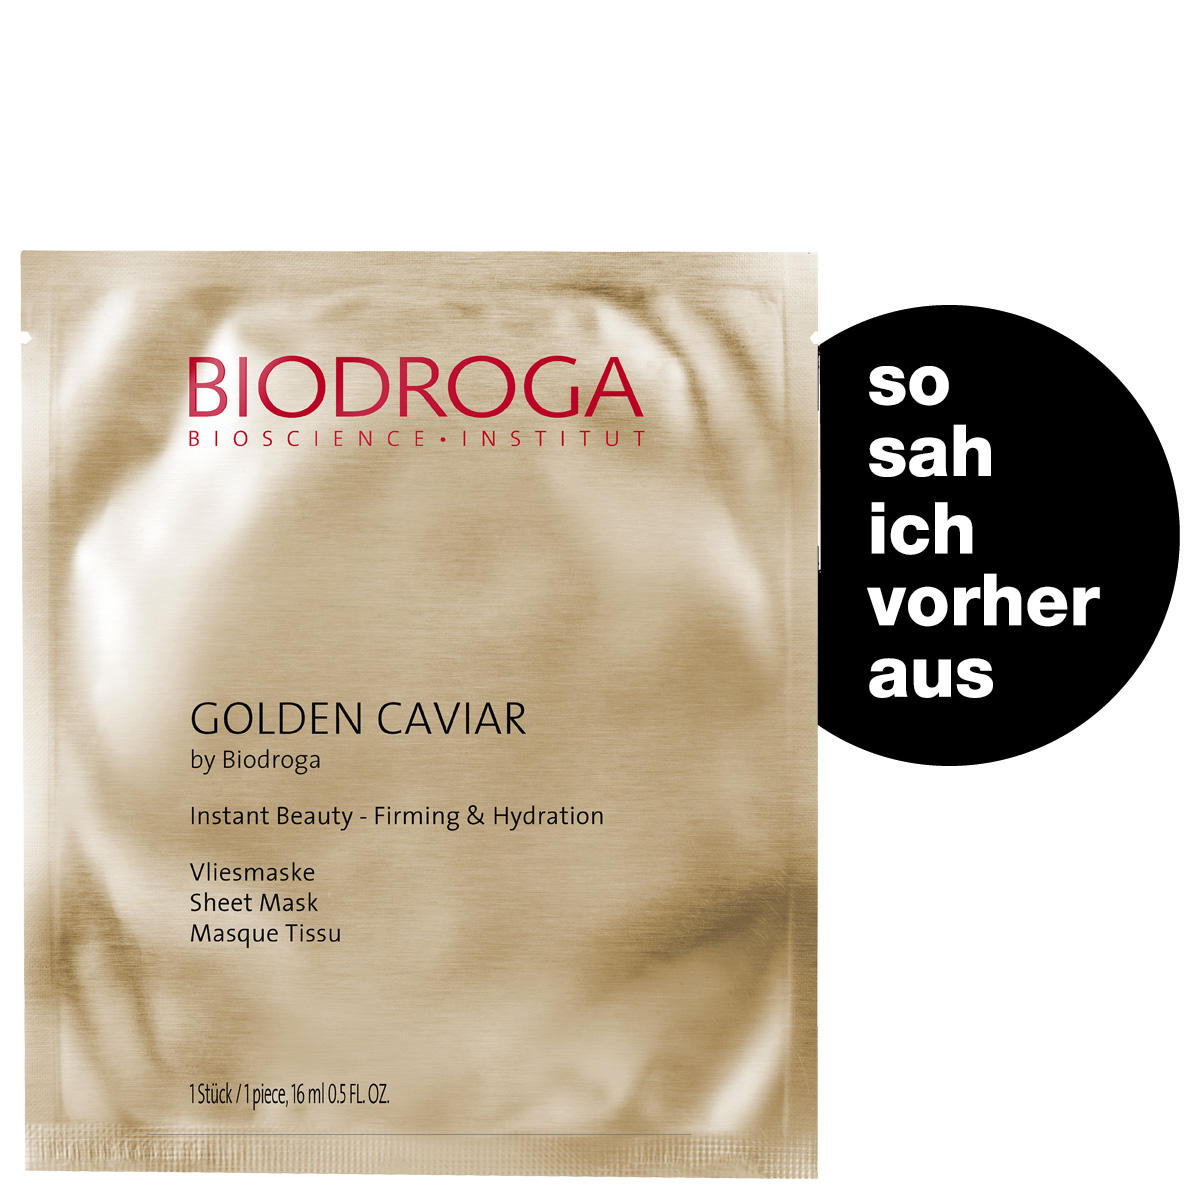 BIODROGA Bioscience Institute GOLDEN CAVIAR Fleece mask 16 ml - 2